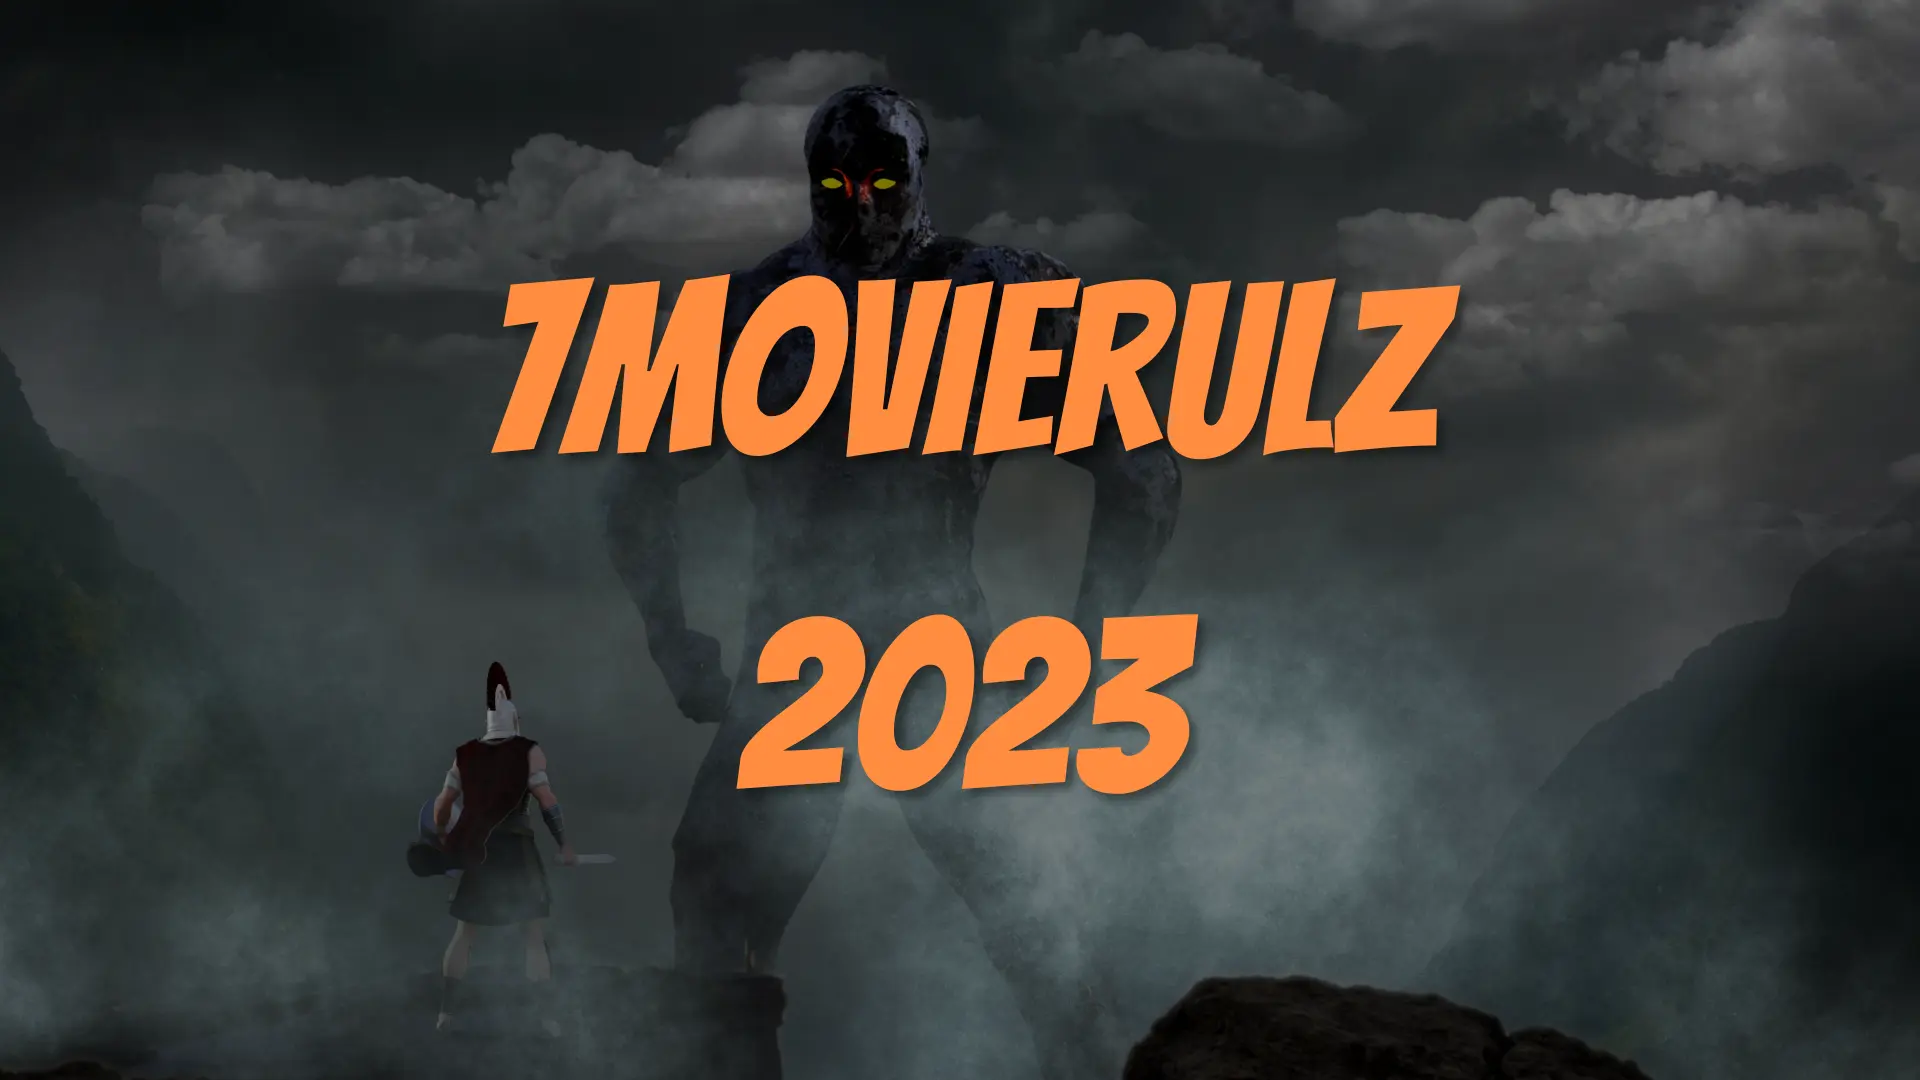 7movierulz 2023